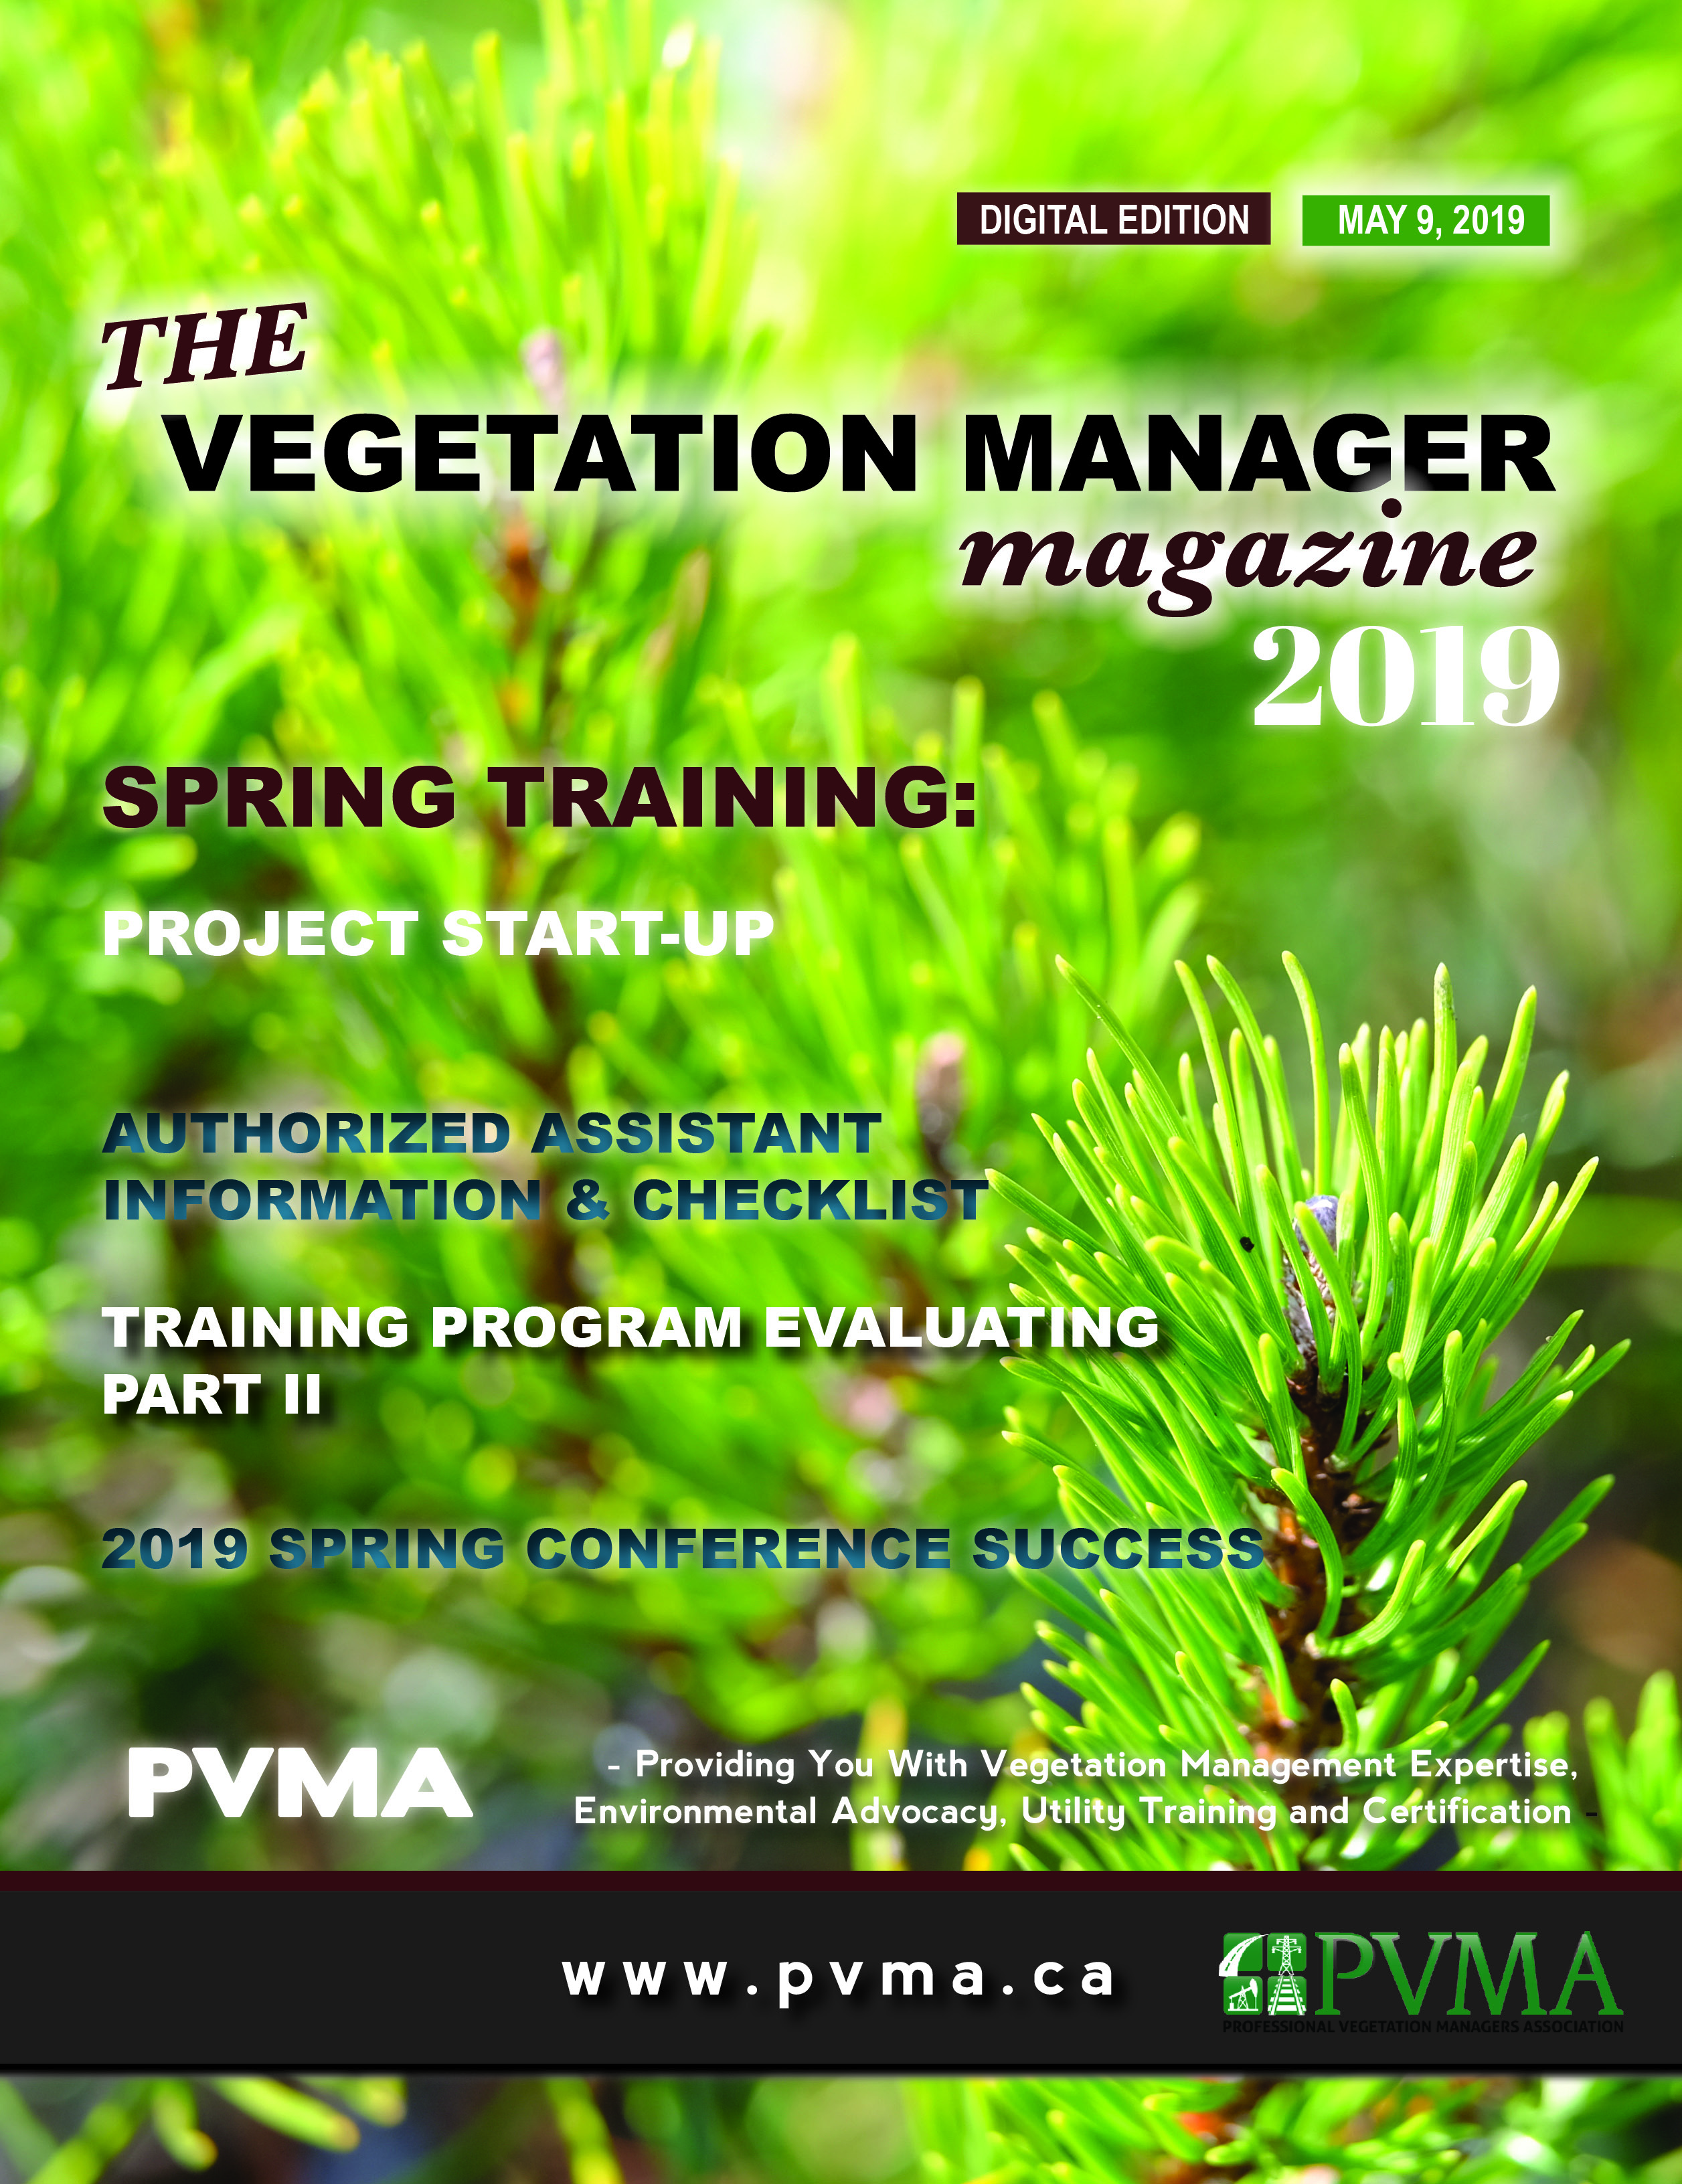 Professional Vegetation Managers Association in Alberta PVMA